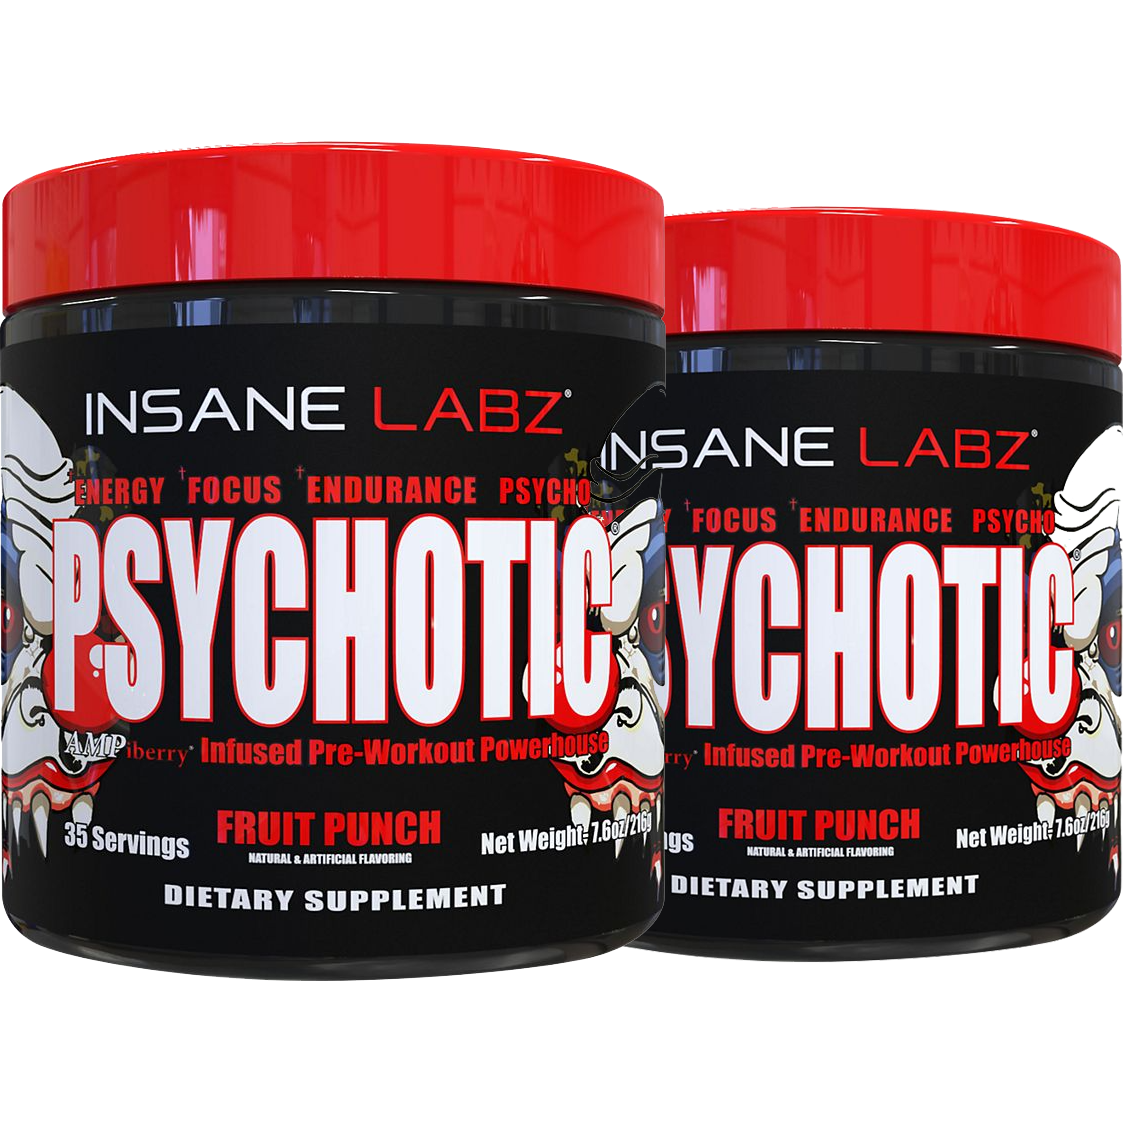 Insane Labz Psychotic 35 Servings 2-Pack